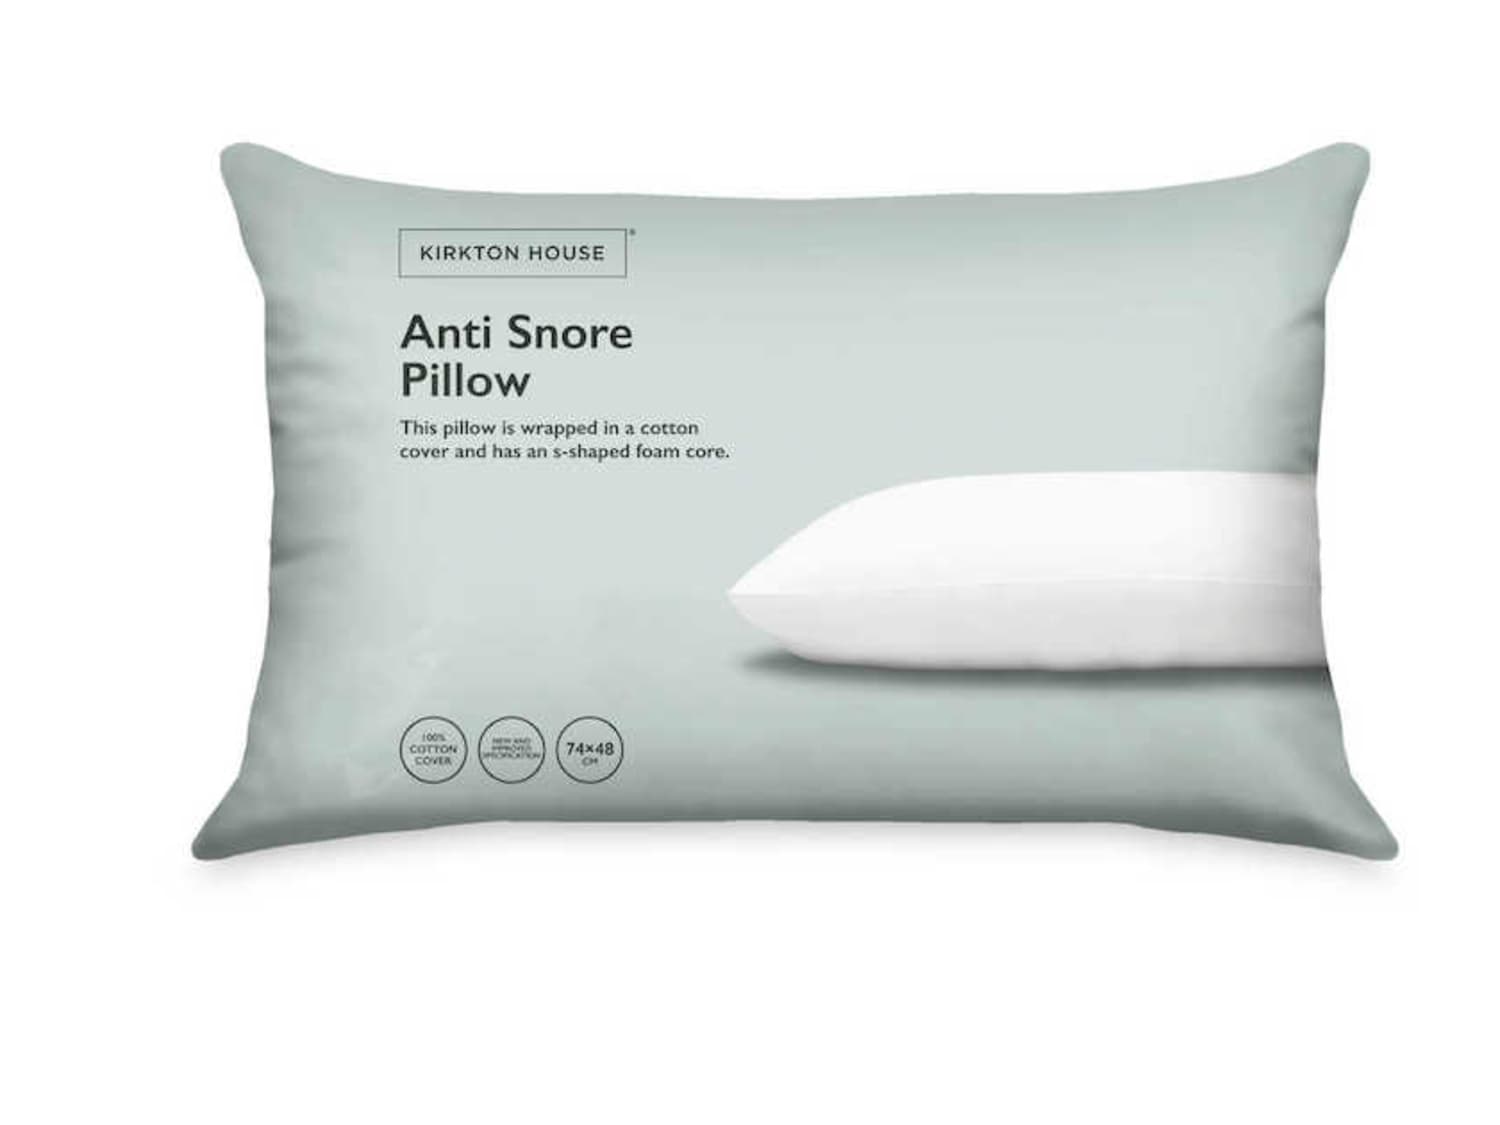 Aldi UK Sells An Anti-Snoring Pillow 